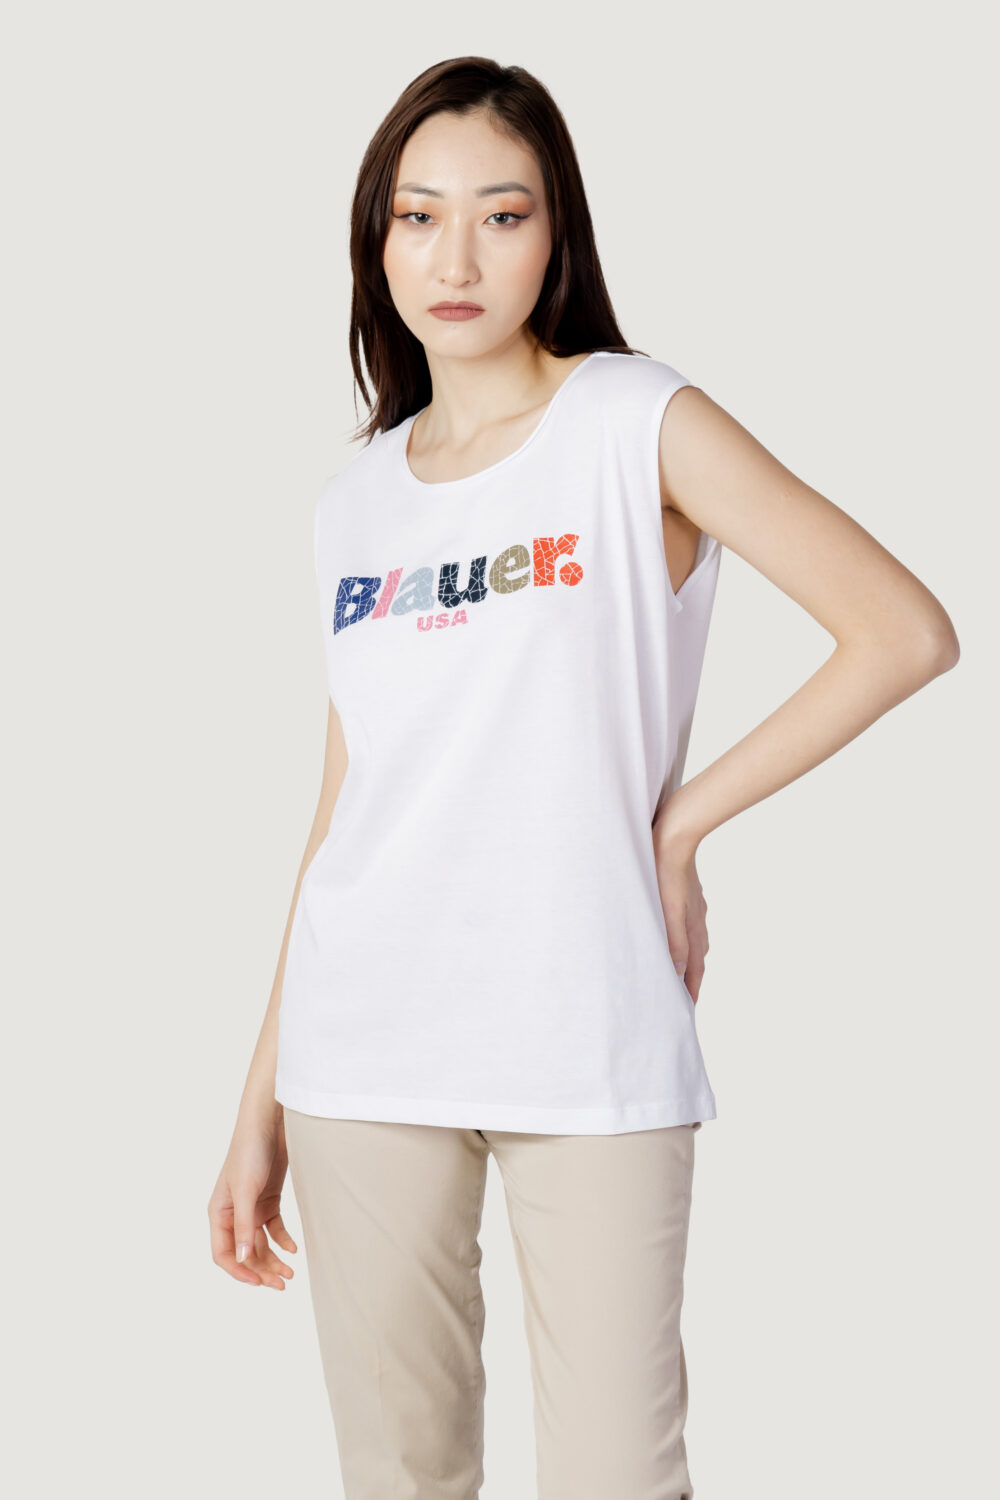 T-shirt Blauer. logo frammentato Bianco - Foto 3